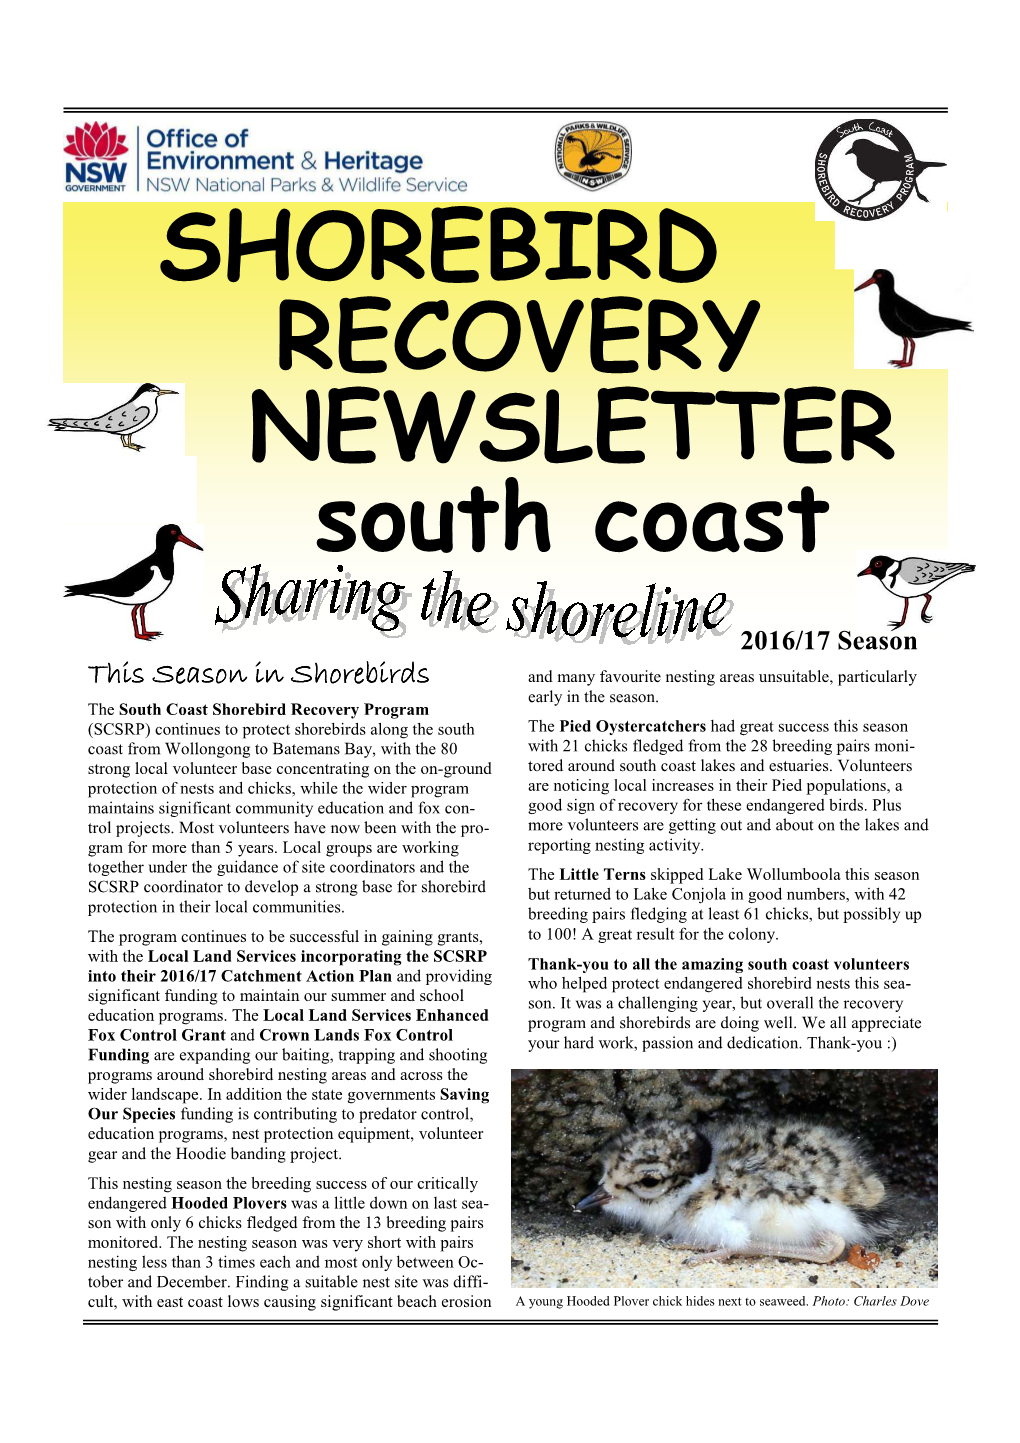 South Coast Shorebird Recovery Program Newsletter 2016/17